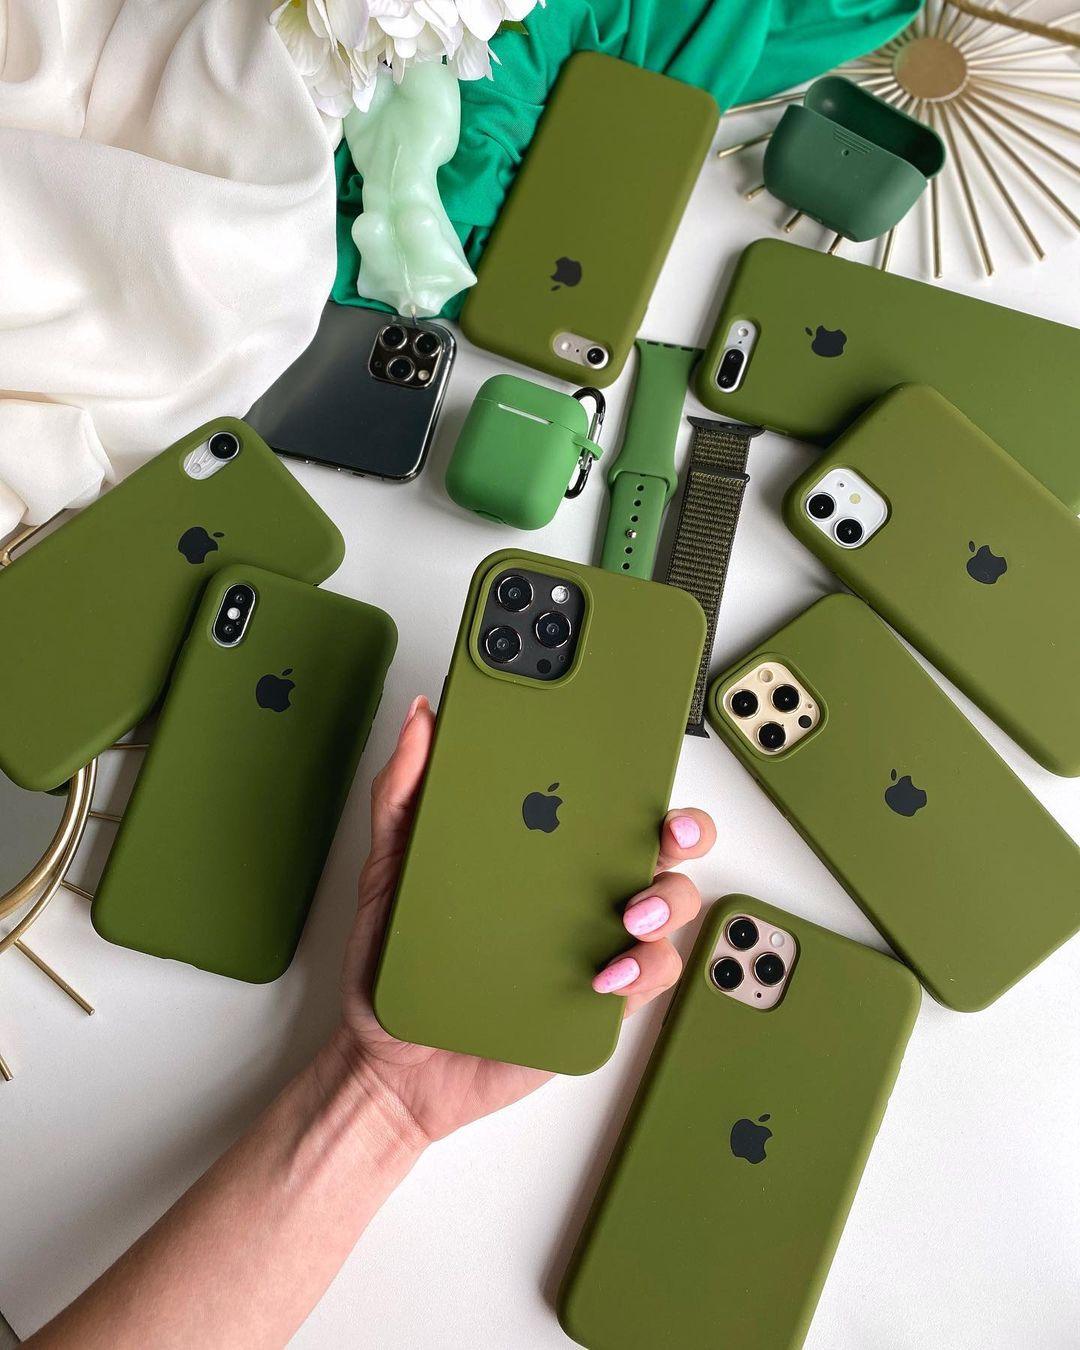 Husa Silicon Interior Microfibra Army Green Apple iPhone 12 Pro Max - StarMobile.ro - Modă pentru telefon